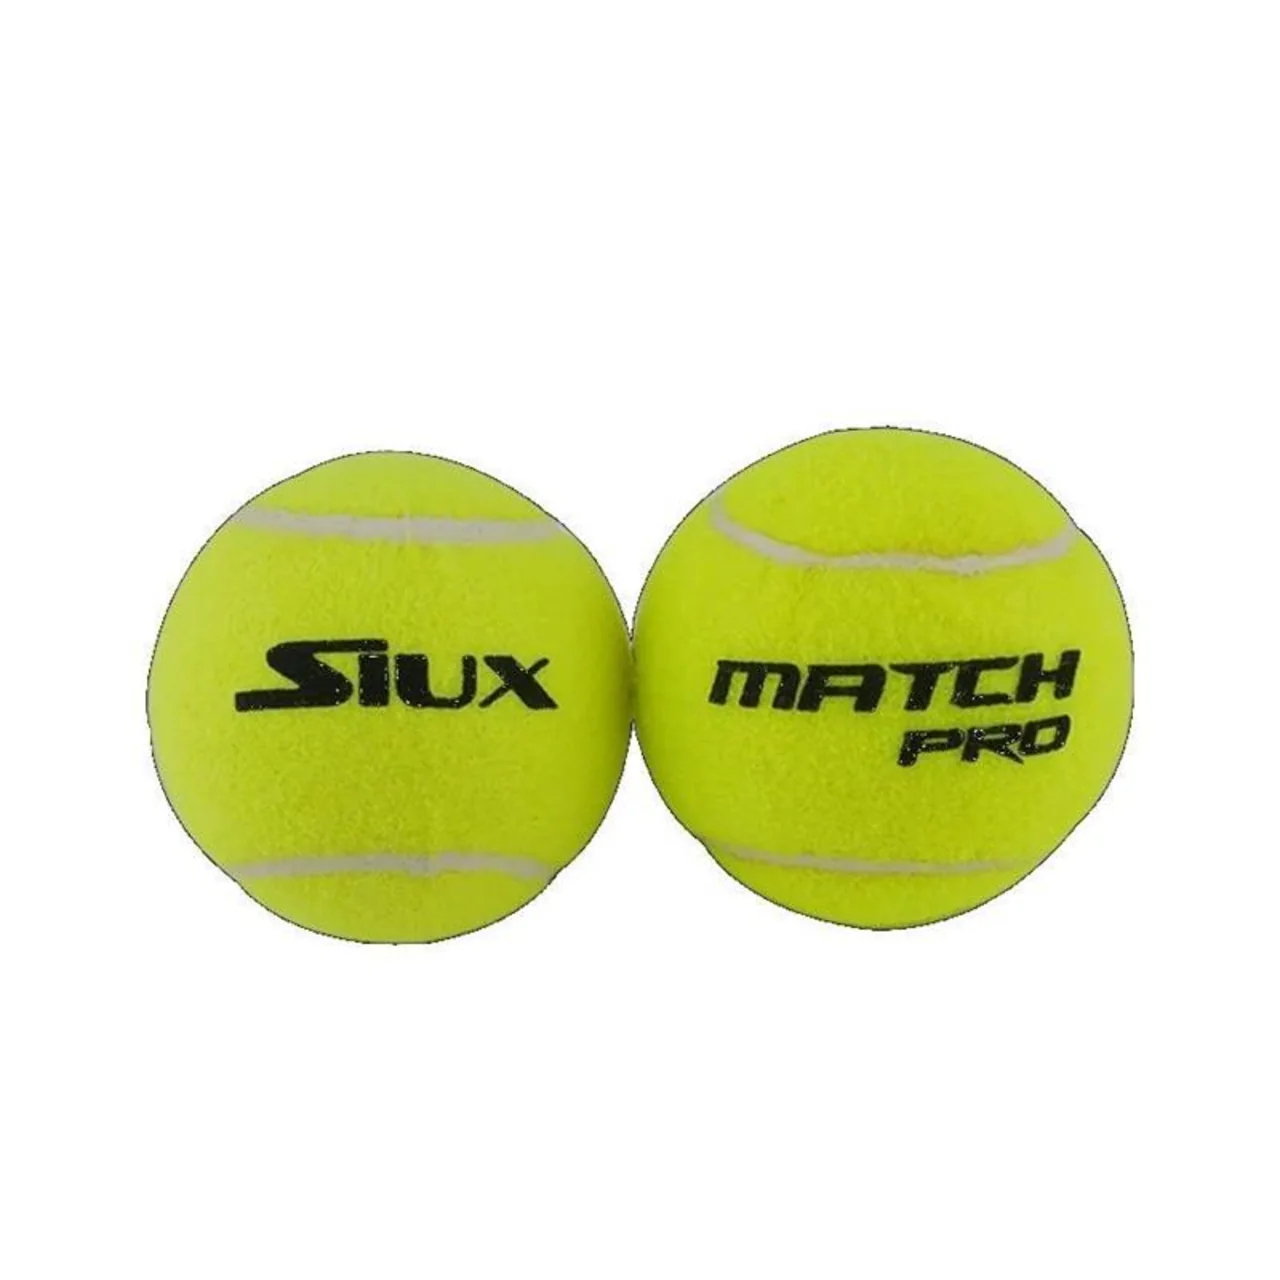 Siux Match Pro 24 tubes